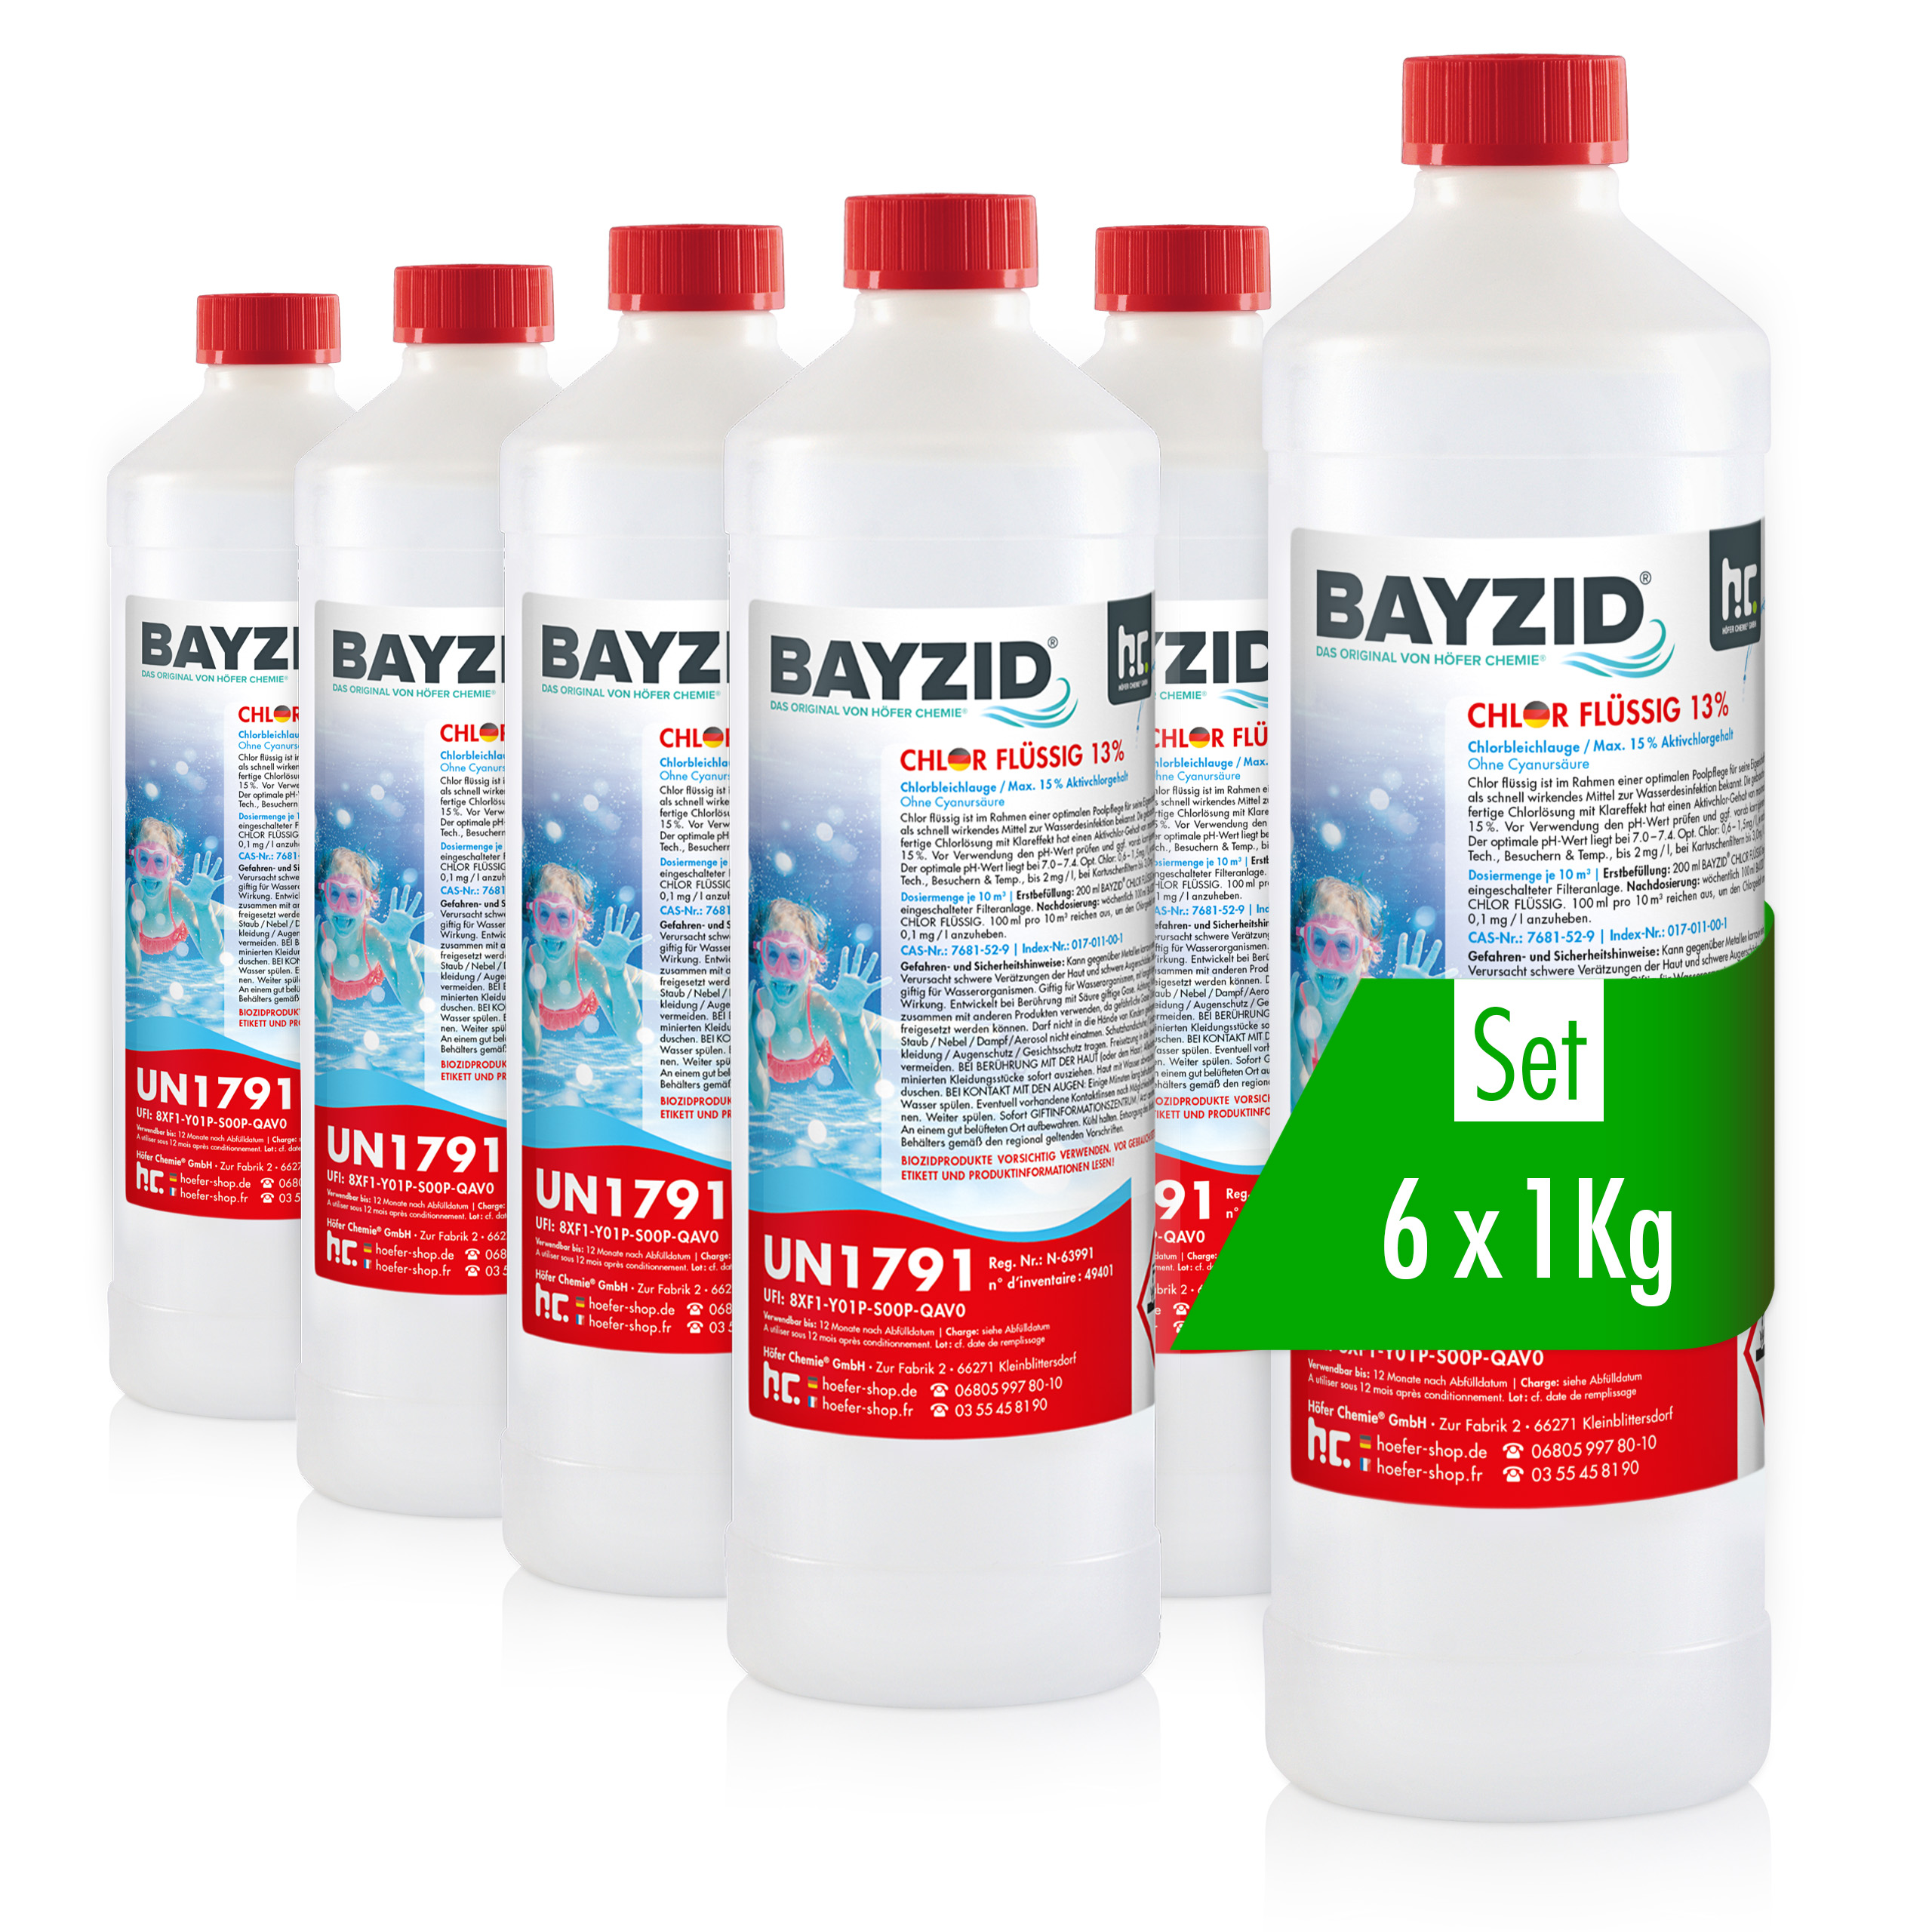 1 kg BAYZID® Chlor 13% flüssig für Pools